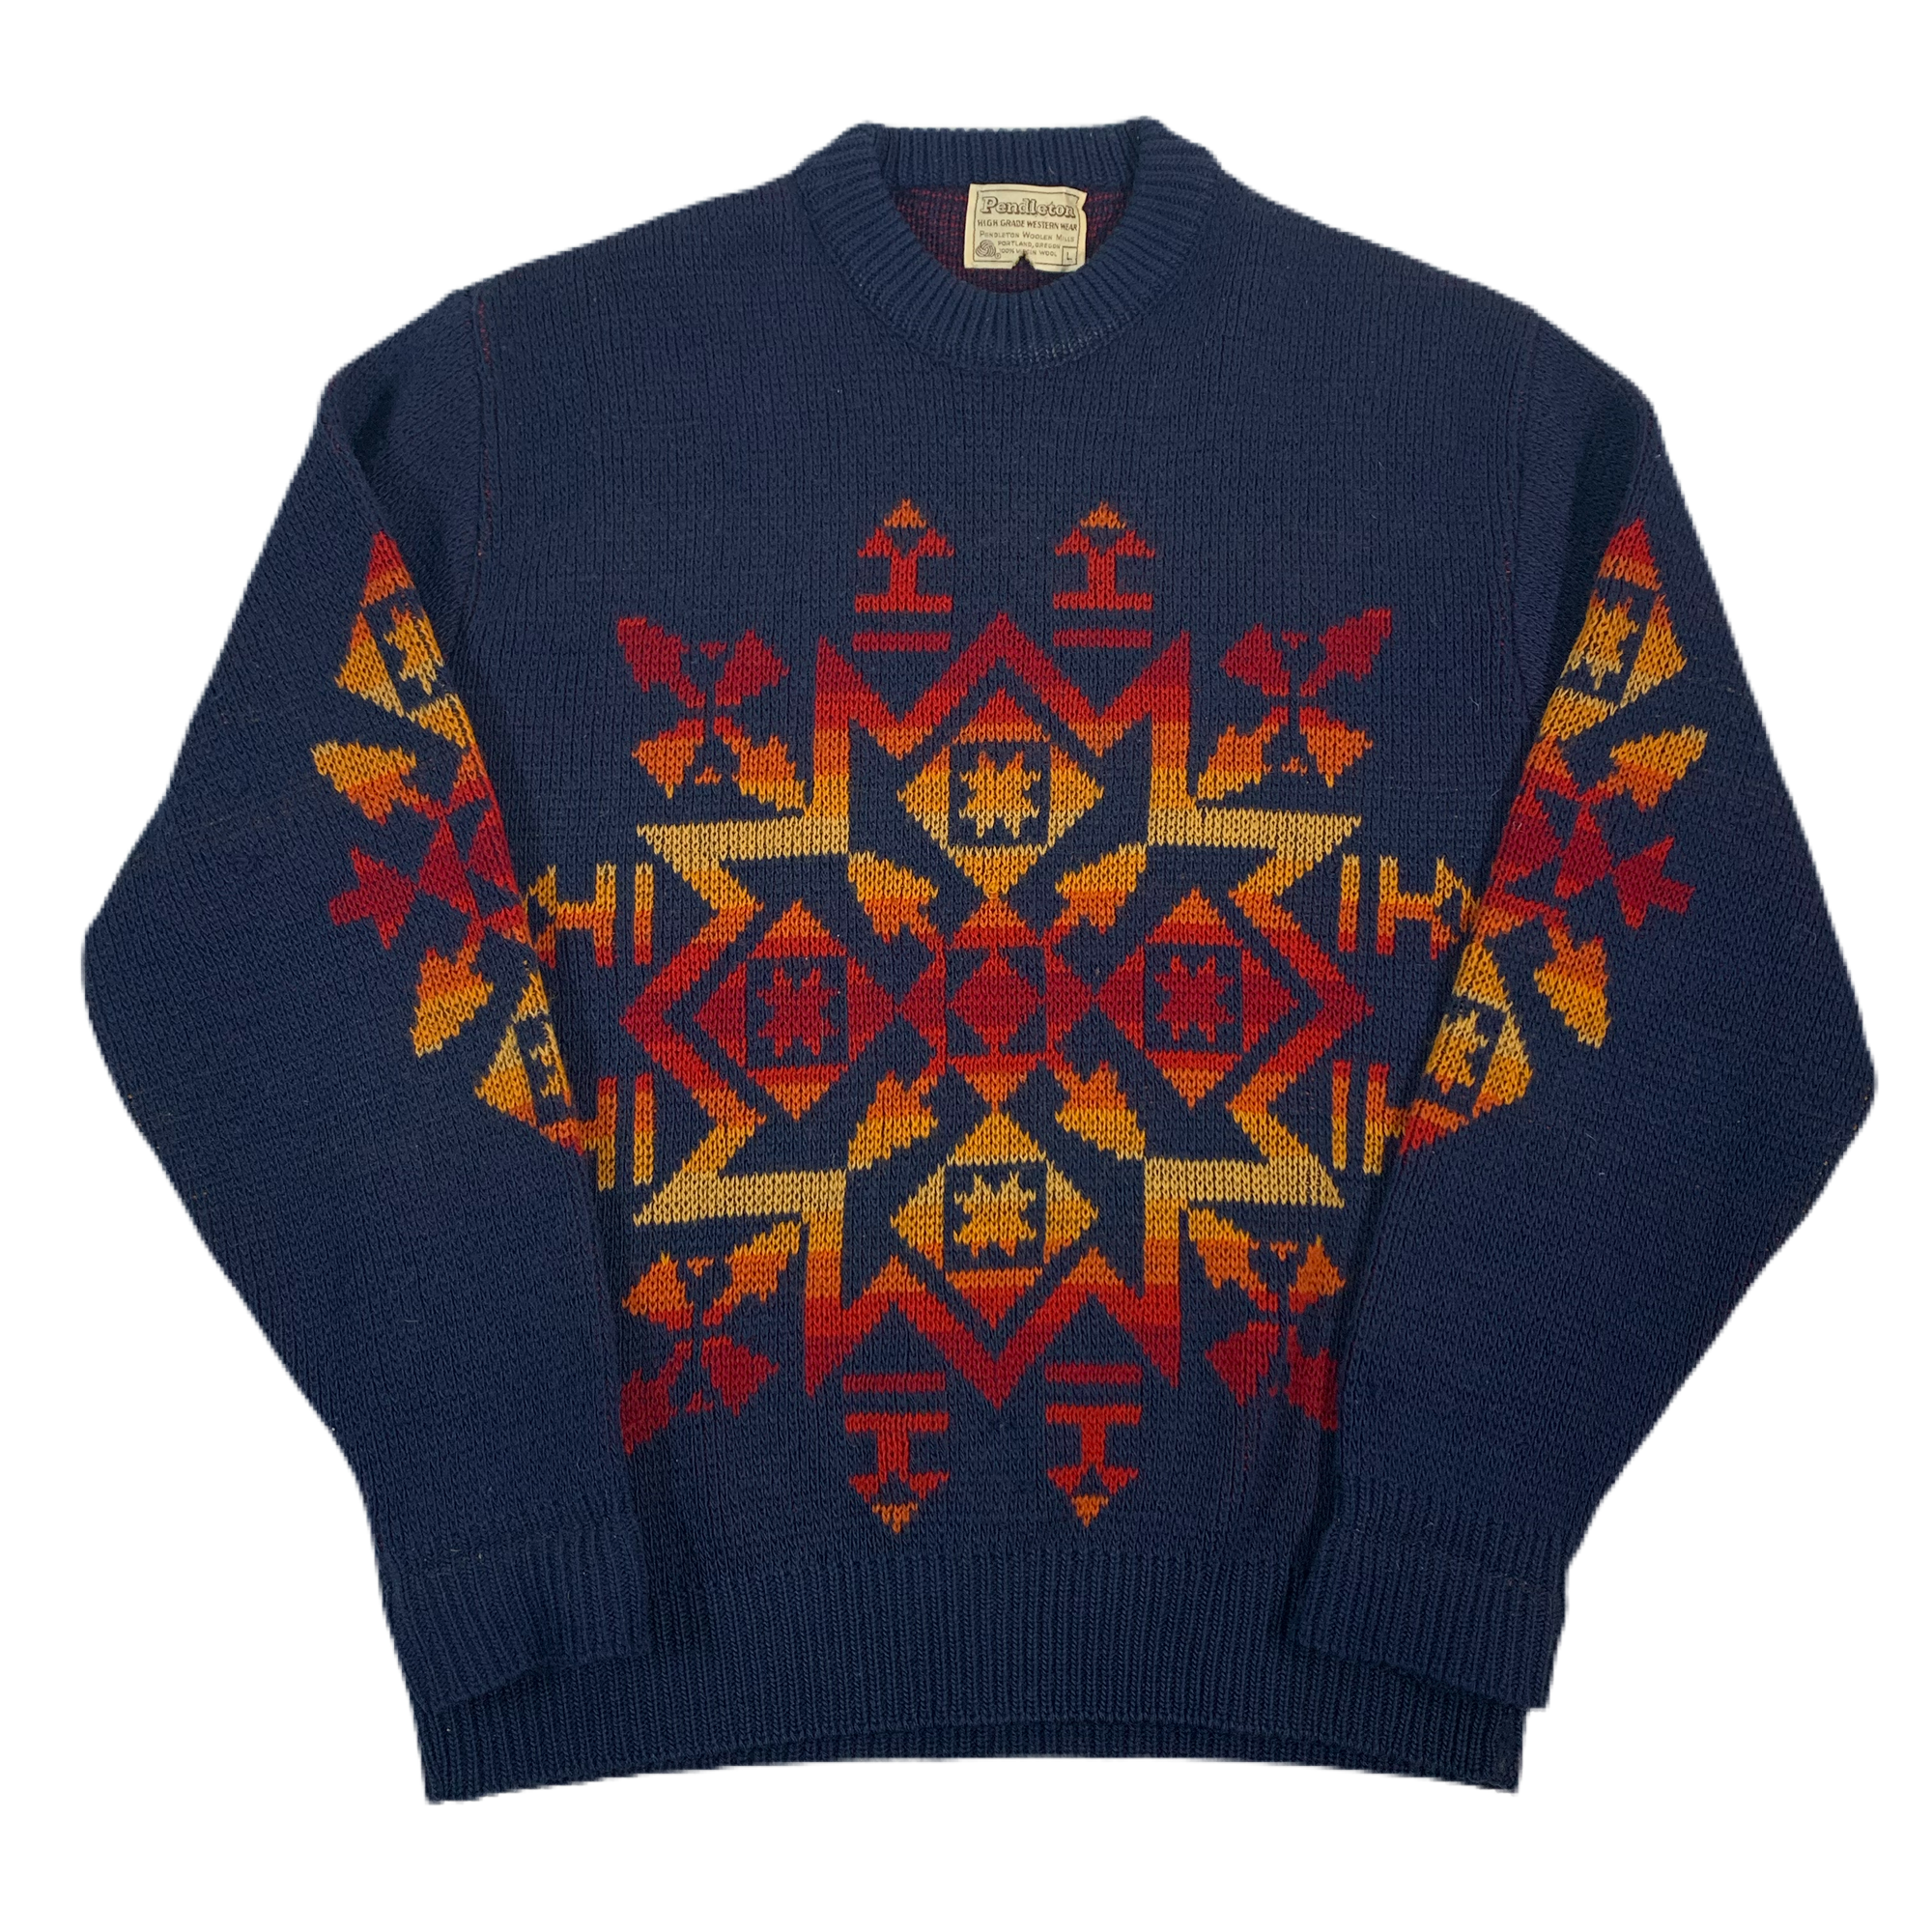 Vintage Pendleton “Western Wear” Crewneck Sweater - jointcustodydc